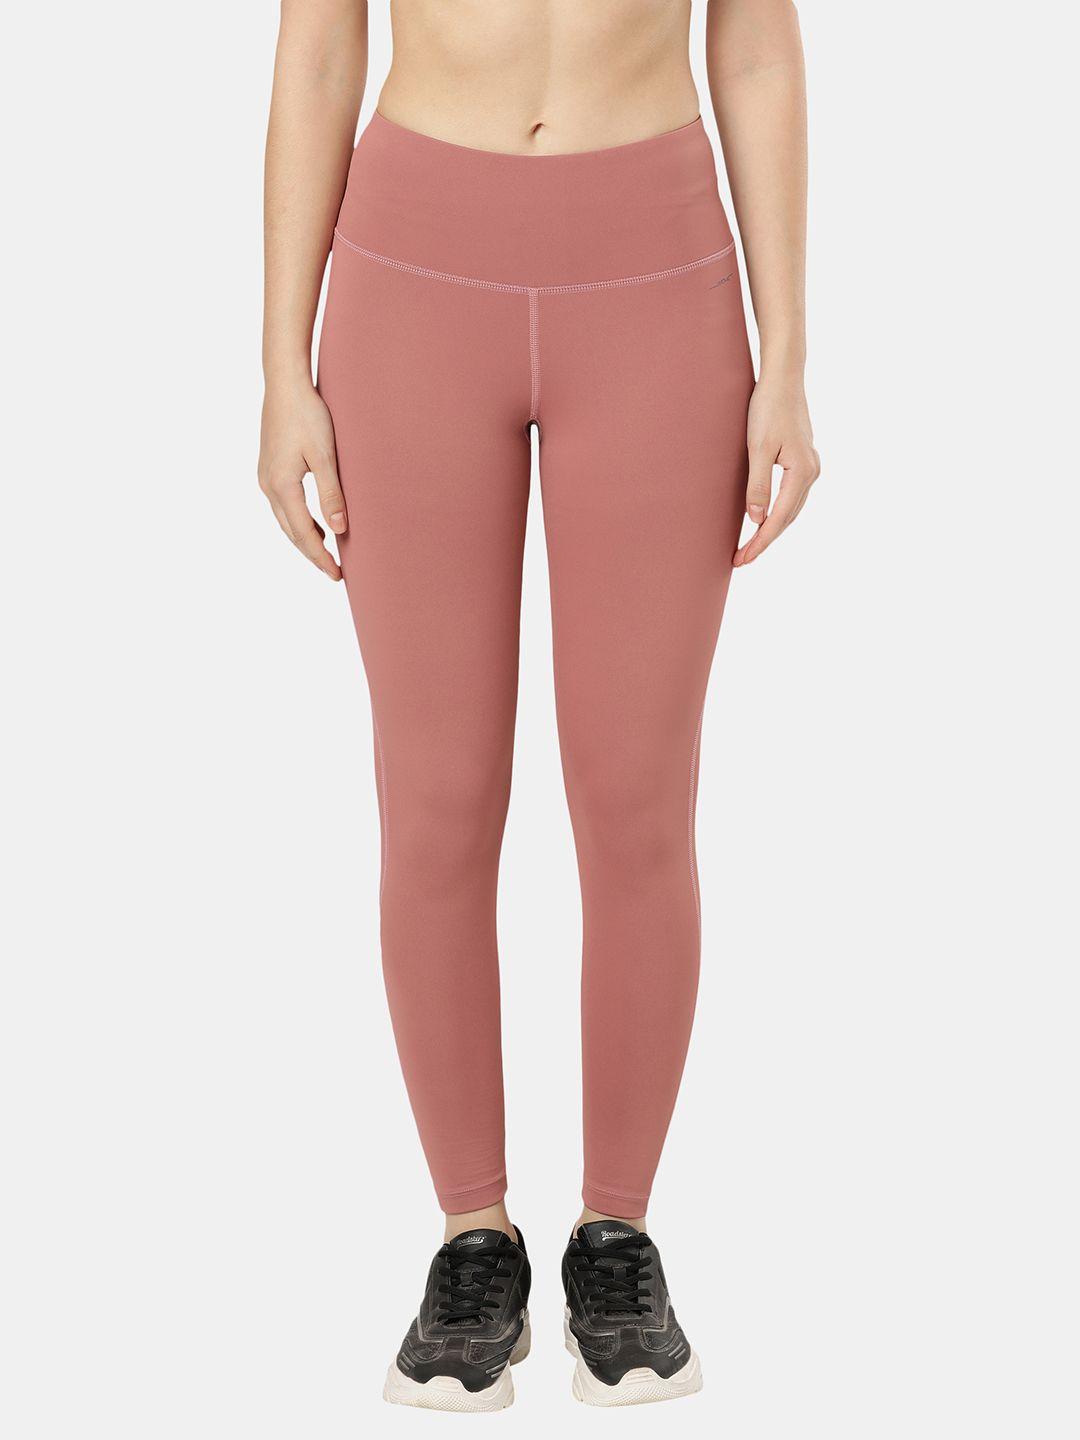 jockey-women-pink-microfiber-elastane-stretch-ankle-length-solid-slim-fit-tights